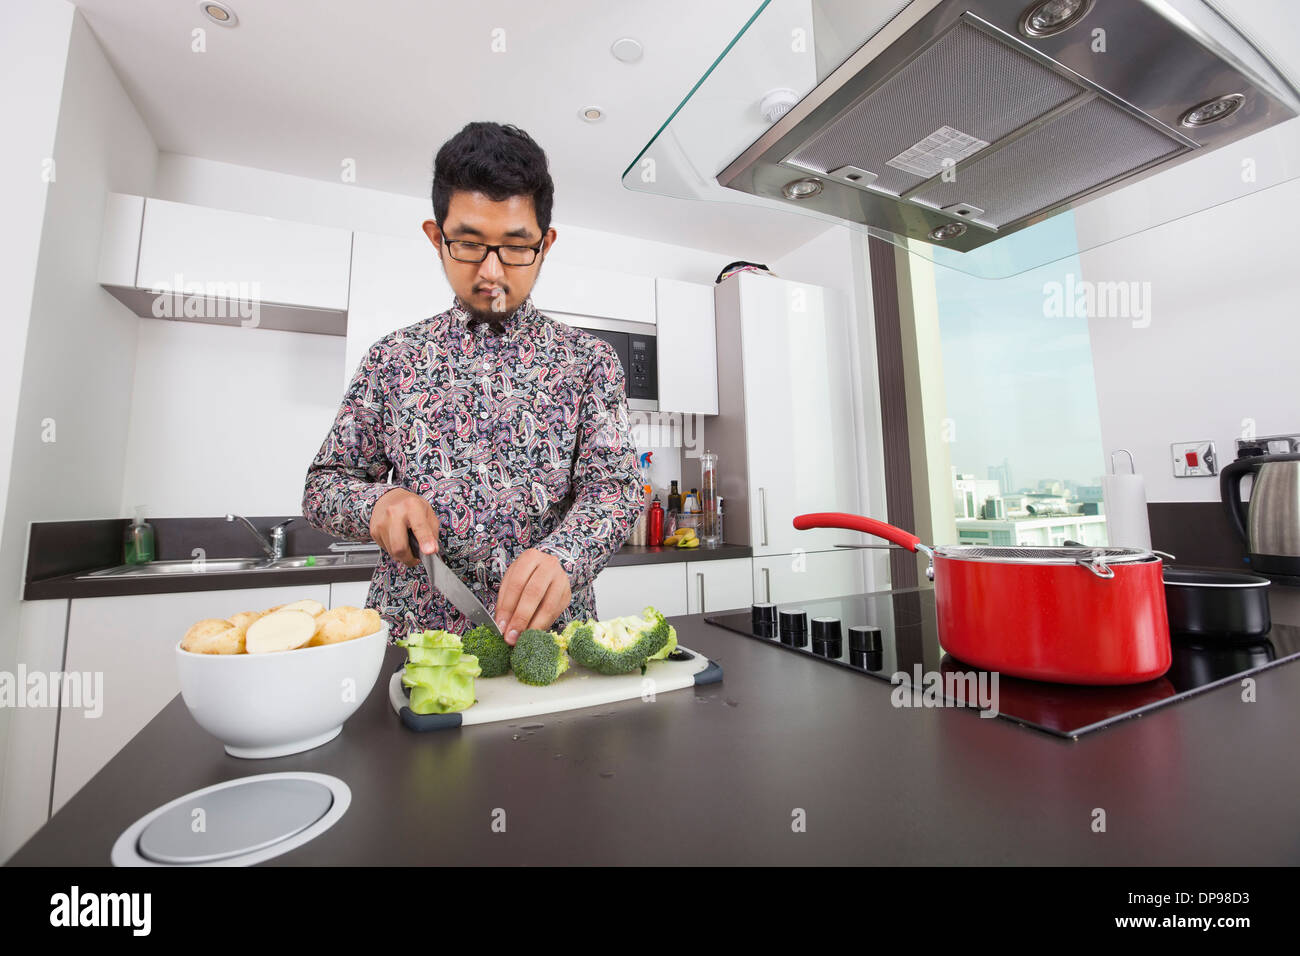 Man Cutting Broccoli At Kitchen Counter Stock Photo 65357743 Alamy